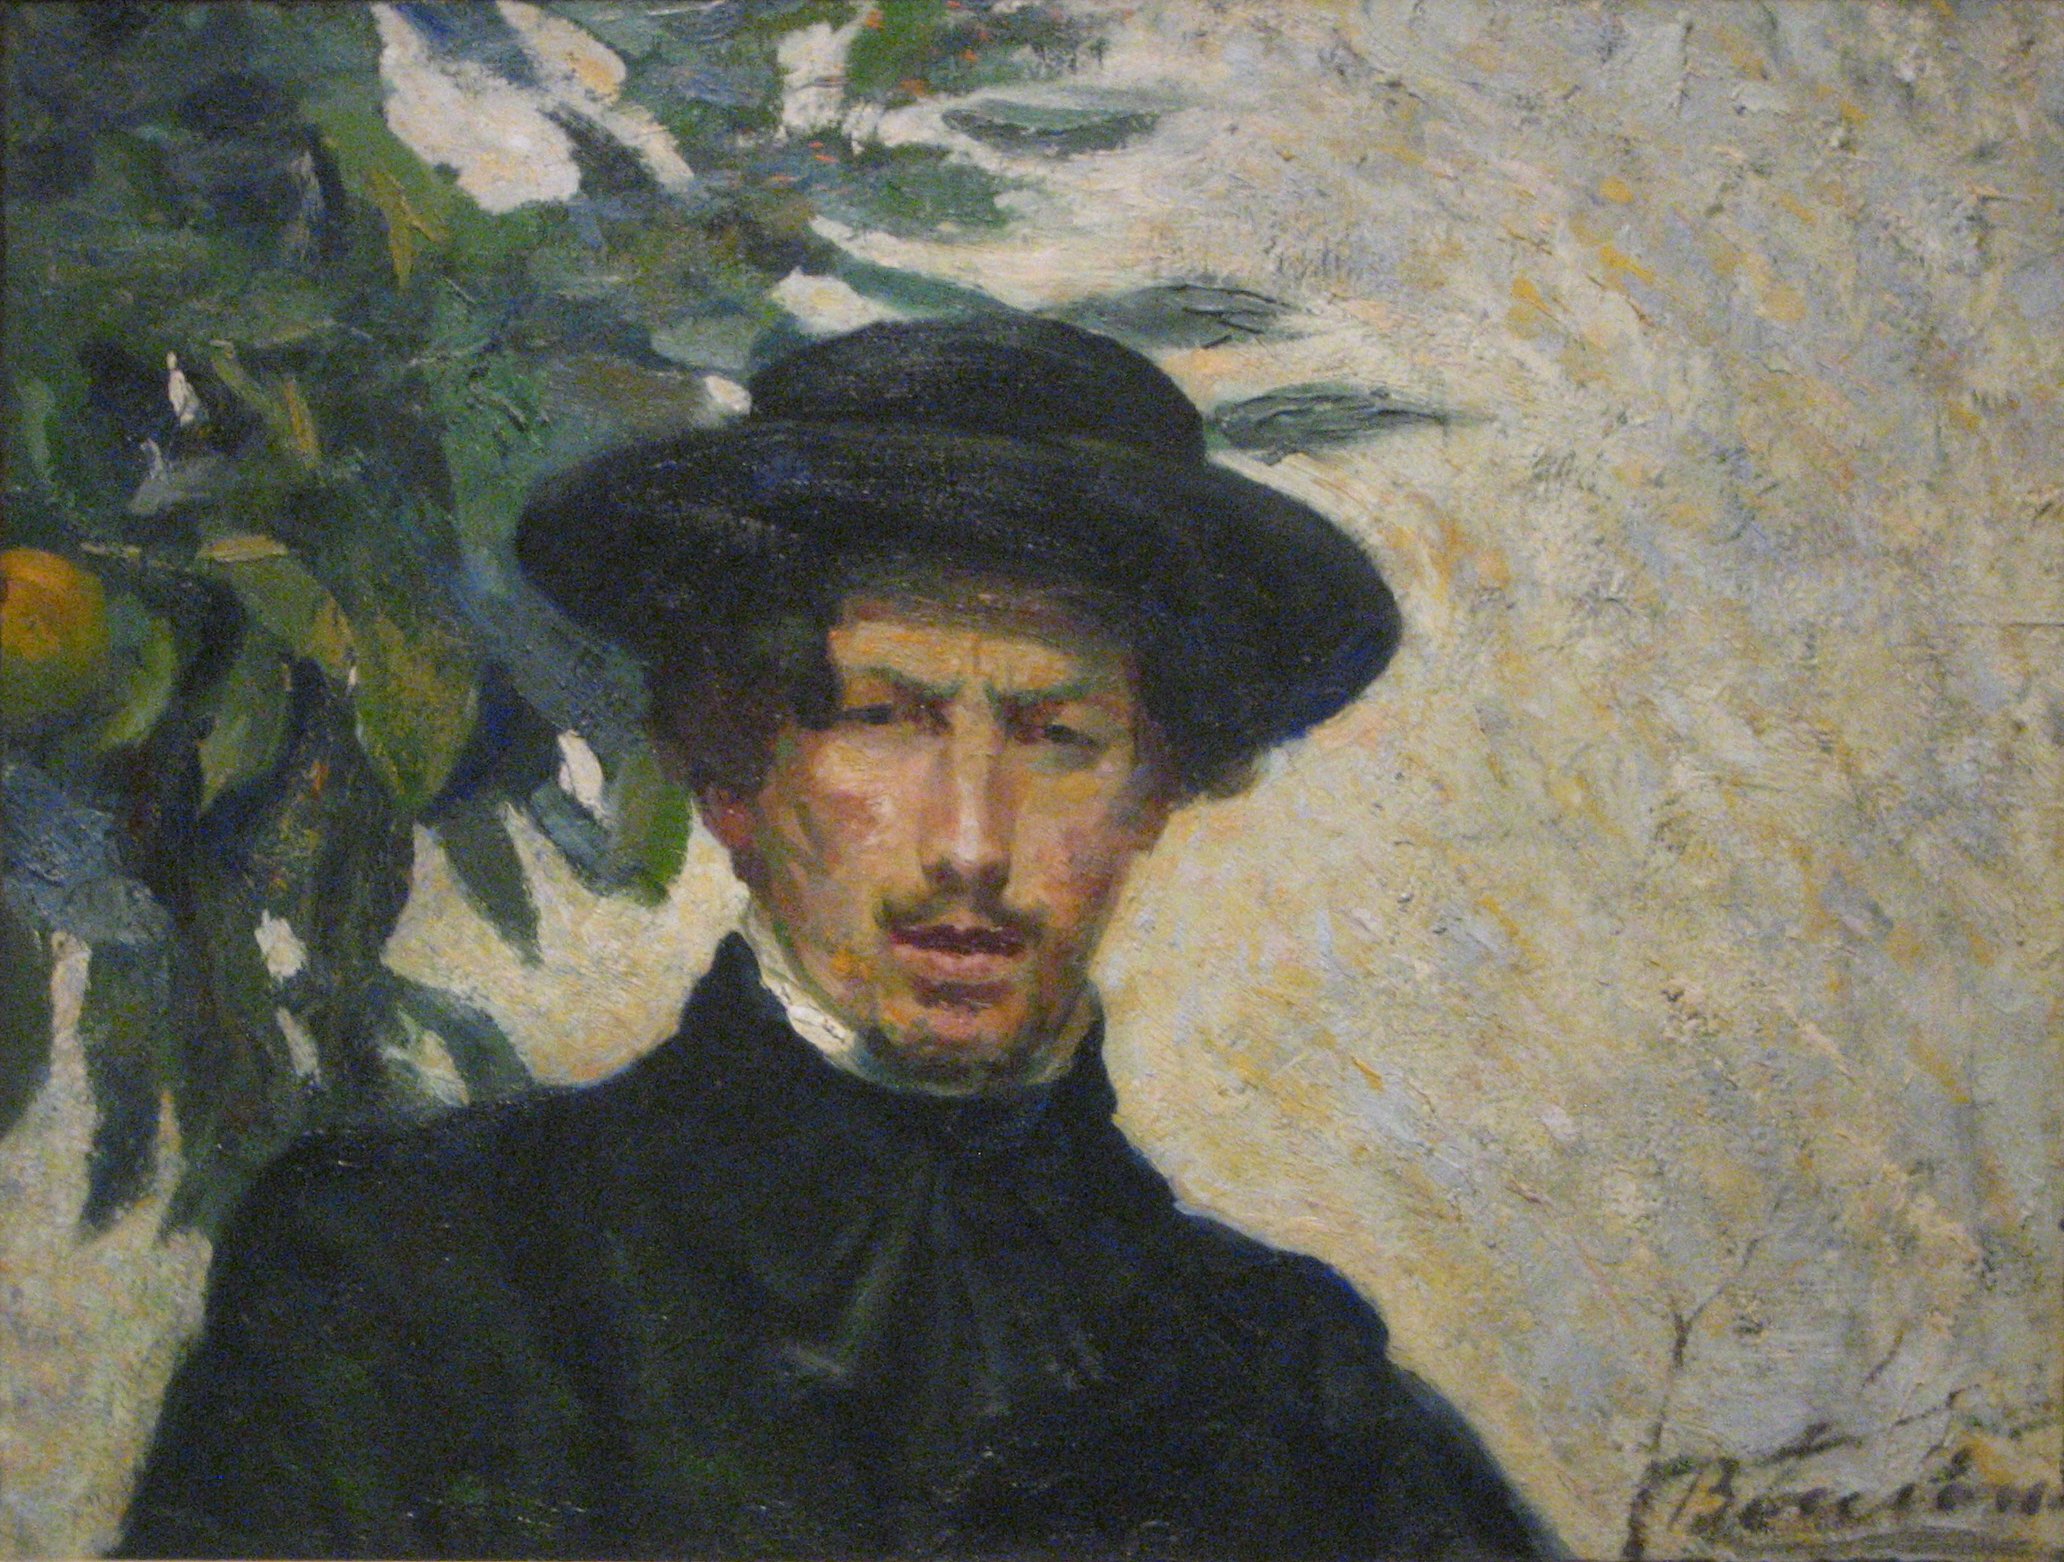 Umberto_Boccioni_-_Self-portrait,_oil_on_canvas,_1905,_Metropolitan_Museum_of_Art